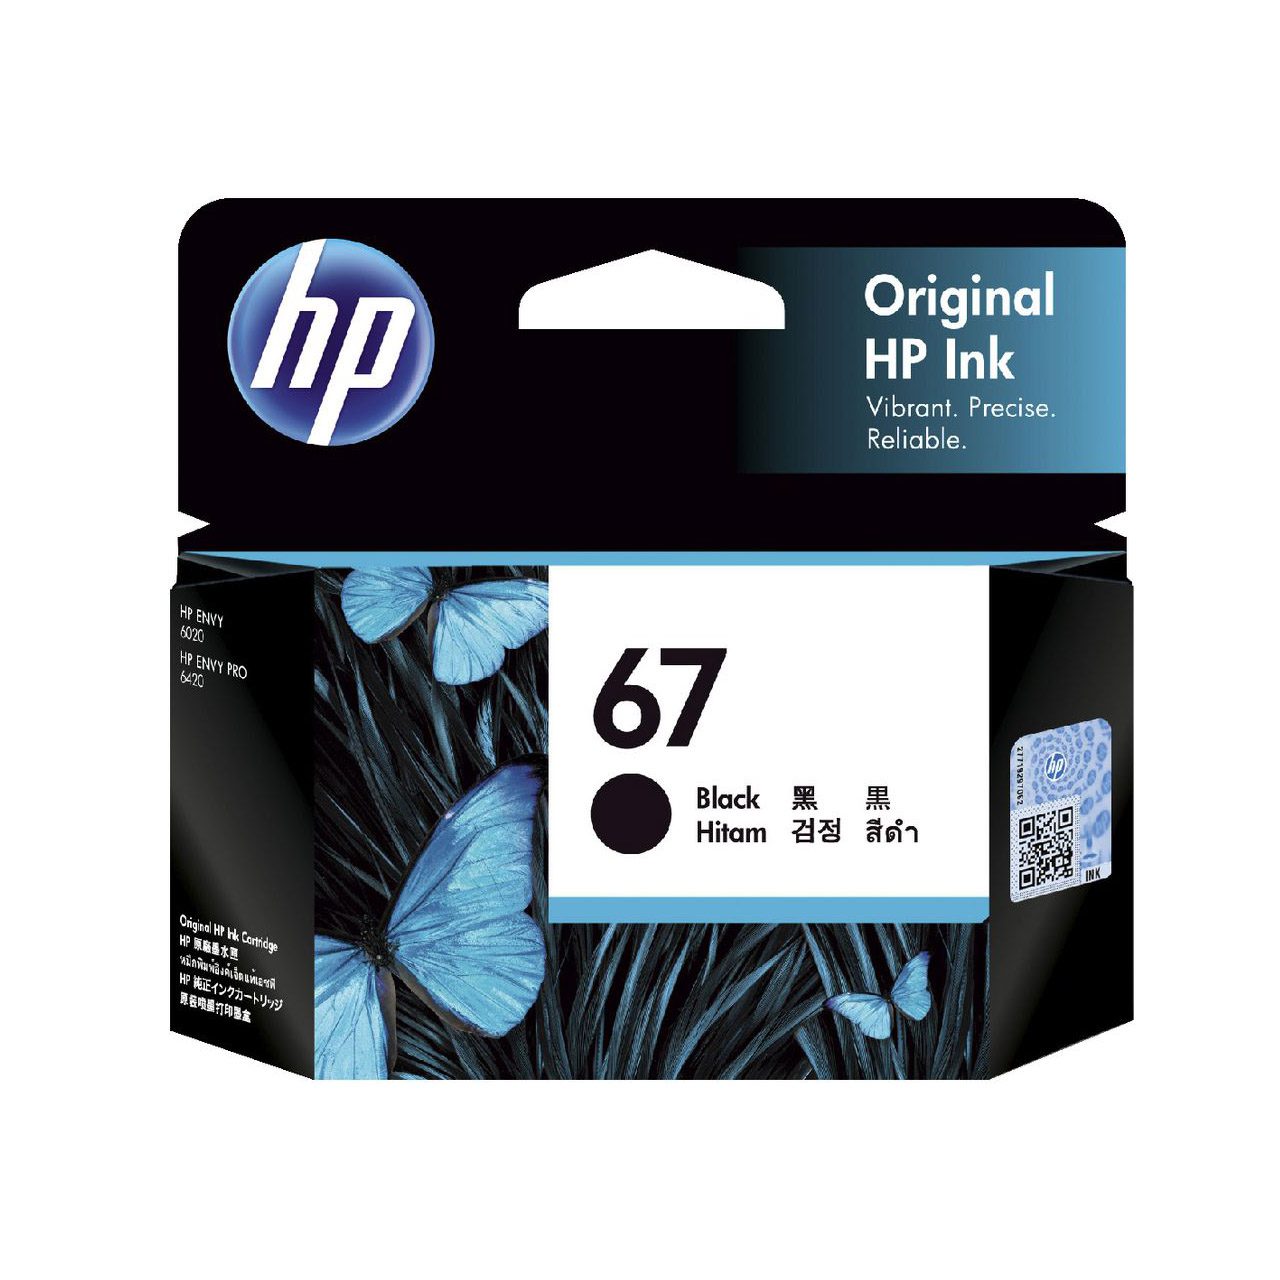 HP 67 Black Cartridge | HP Catridges | OfficeSupplies